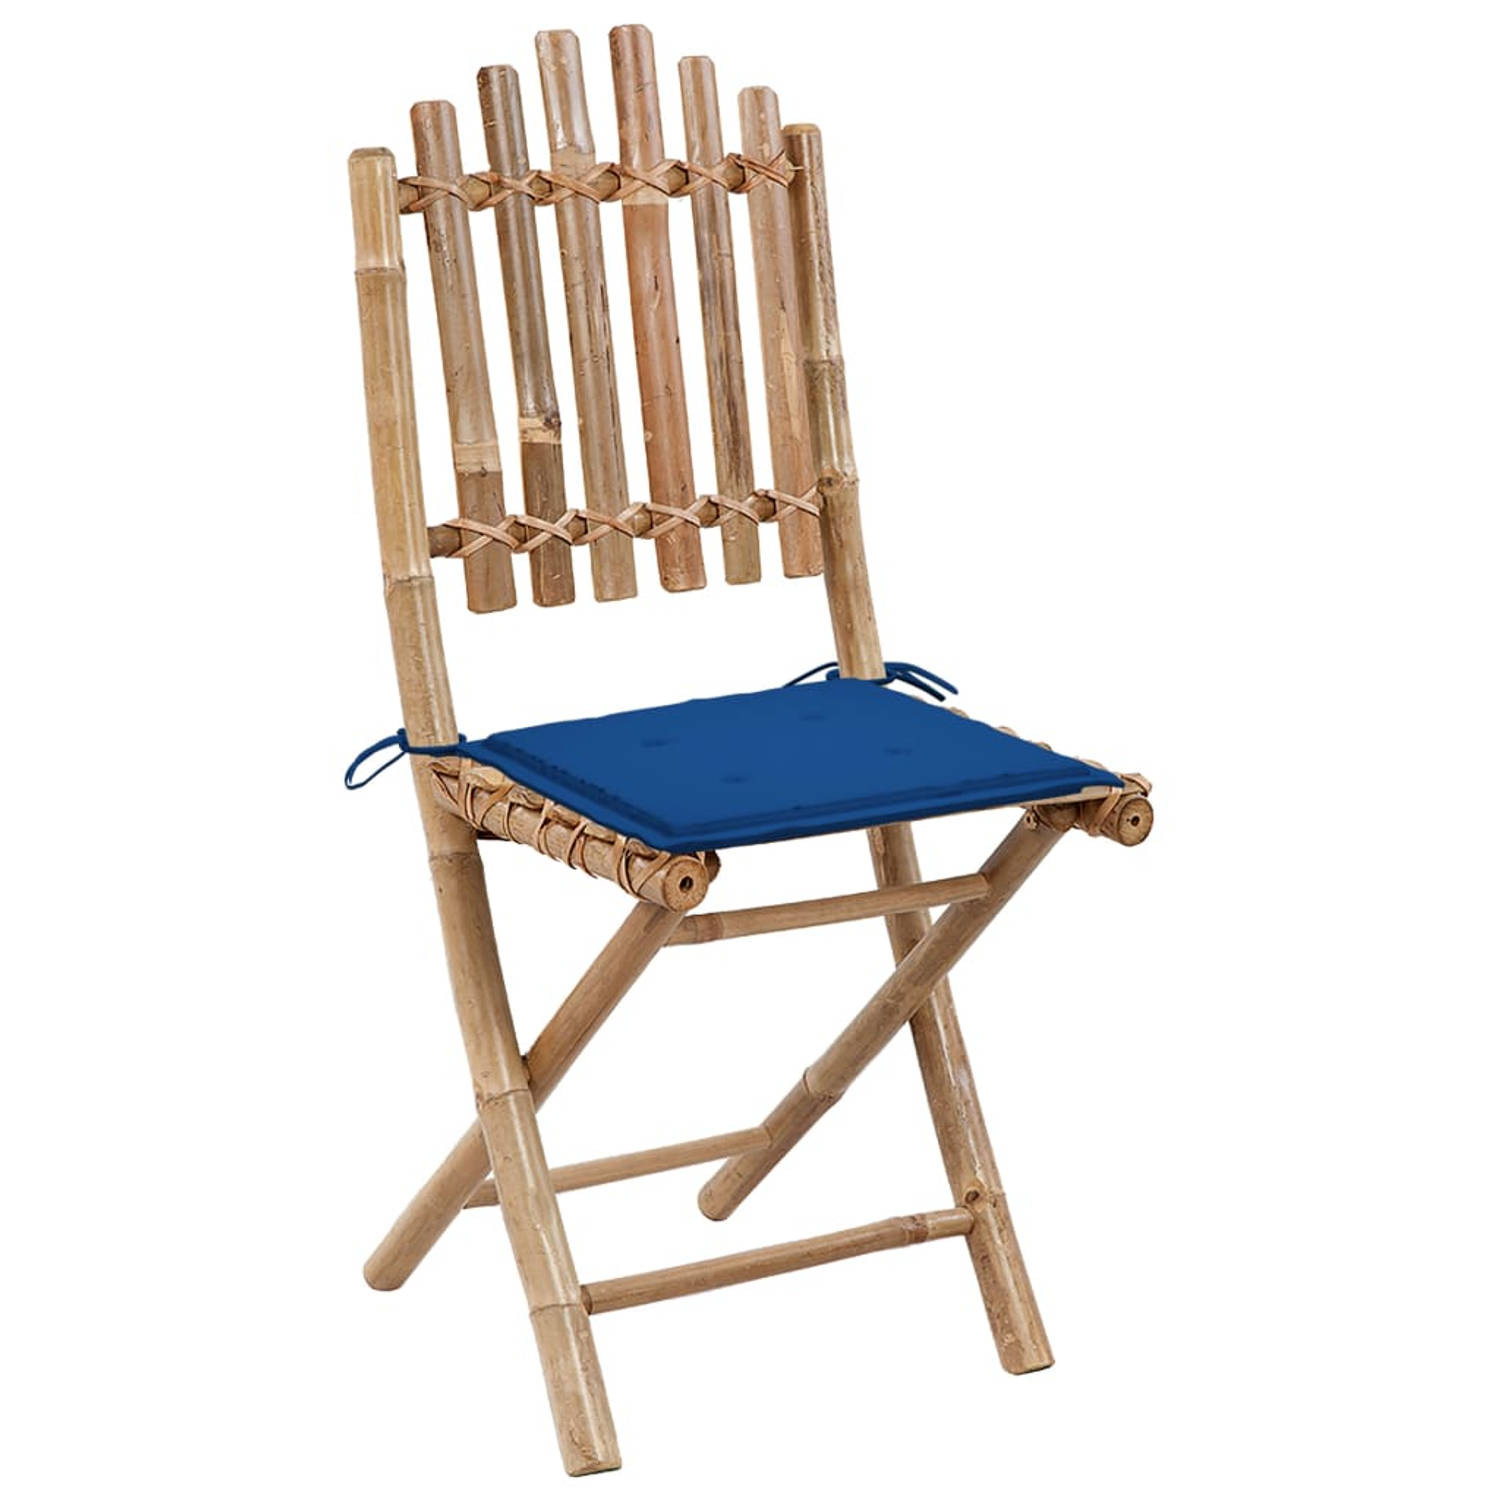 The Living Store buitenstoelen set - bamboe - 50x42x92 cm - inklapbaar - blauw kussen (2 stuks)